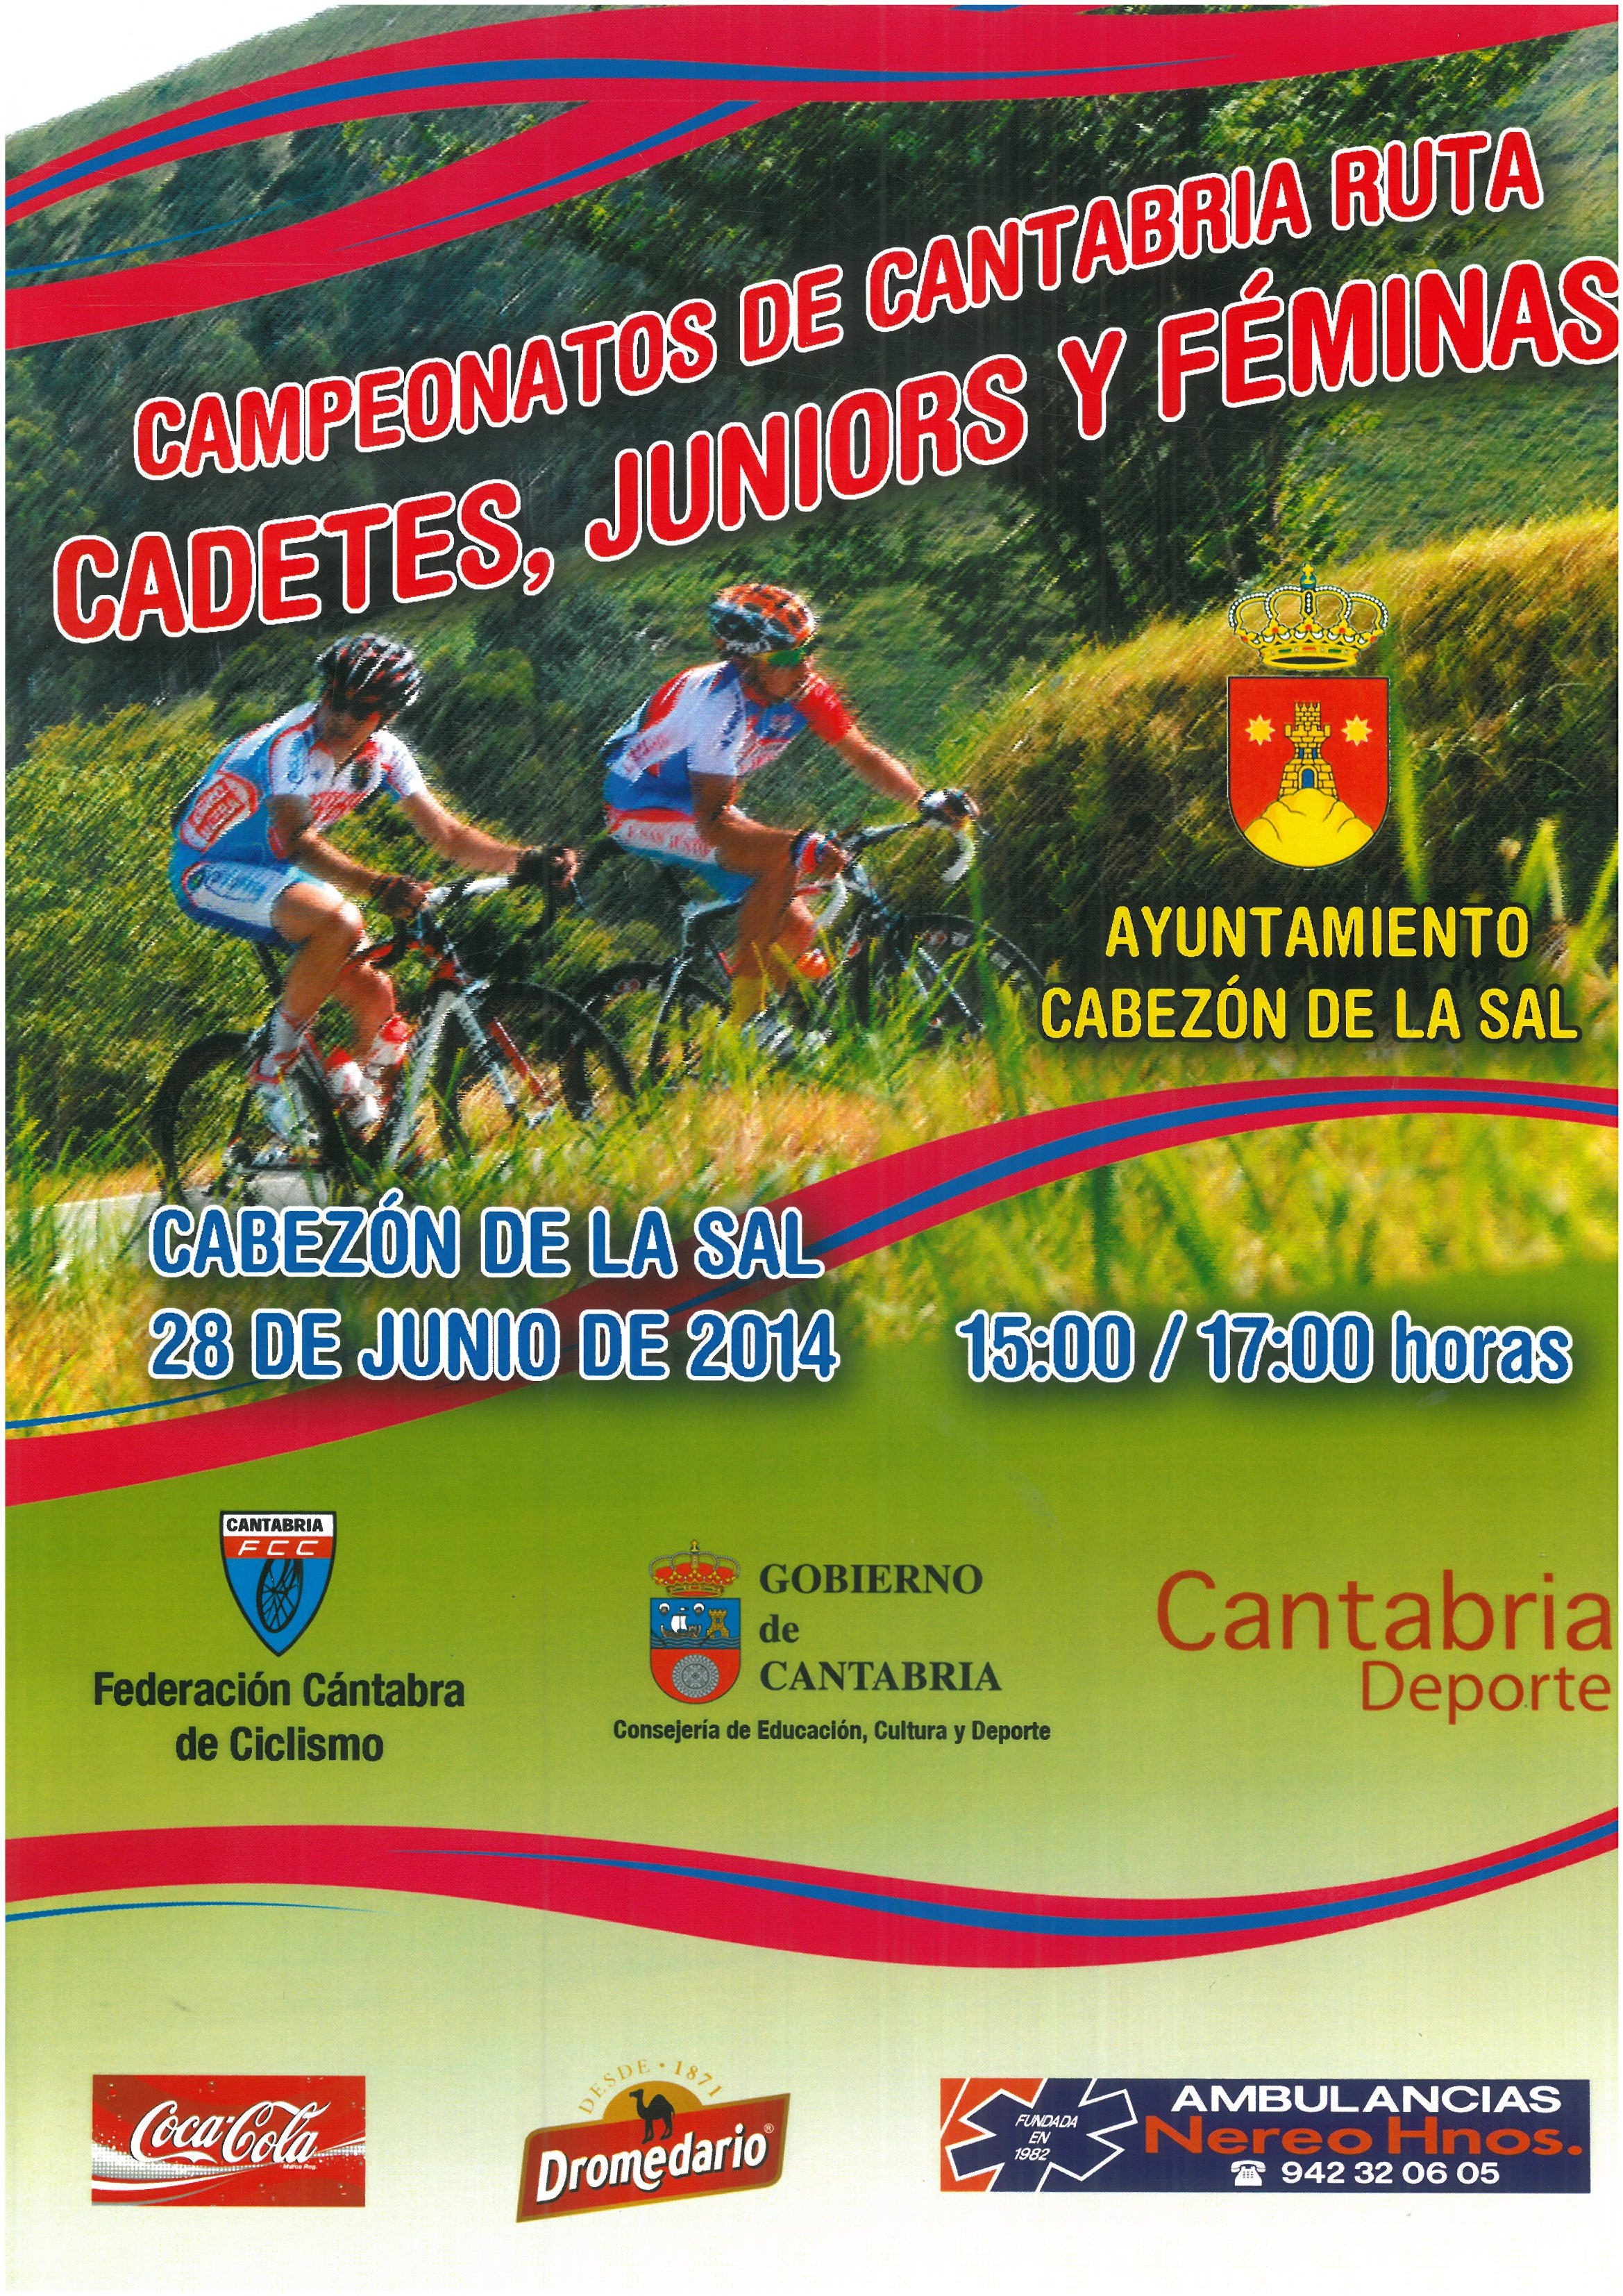 http://www.cabezondelasal.net/wp-content/uploads/2014/06/campeonatos-cantabria-en-ruta.jpg